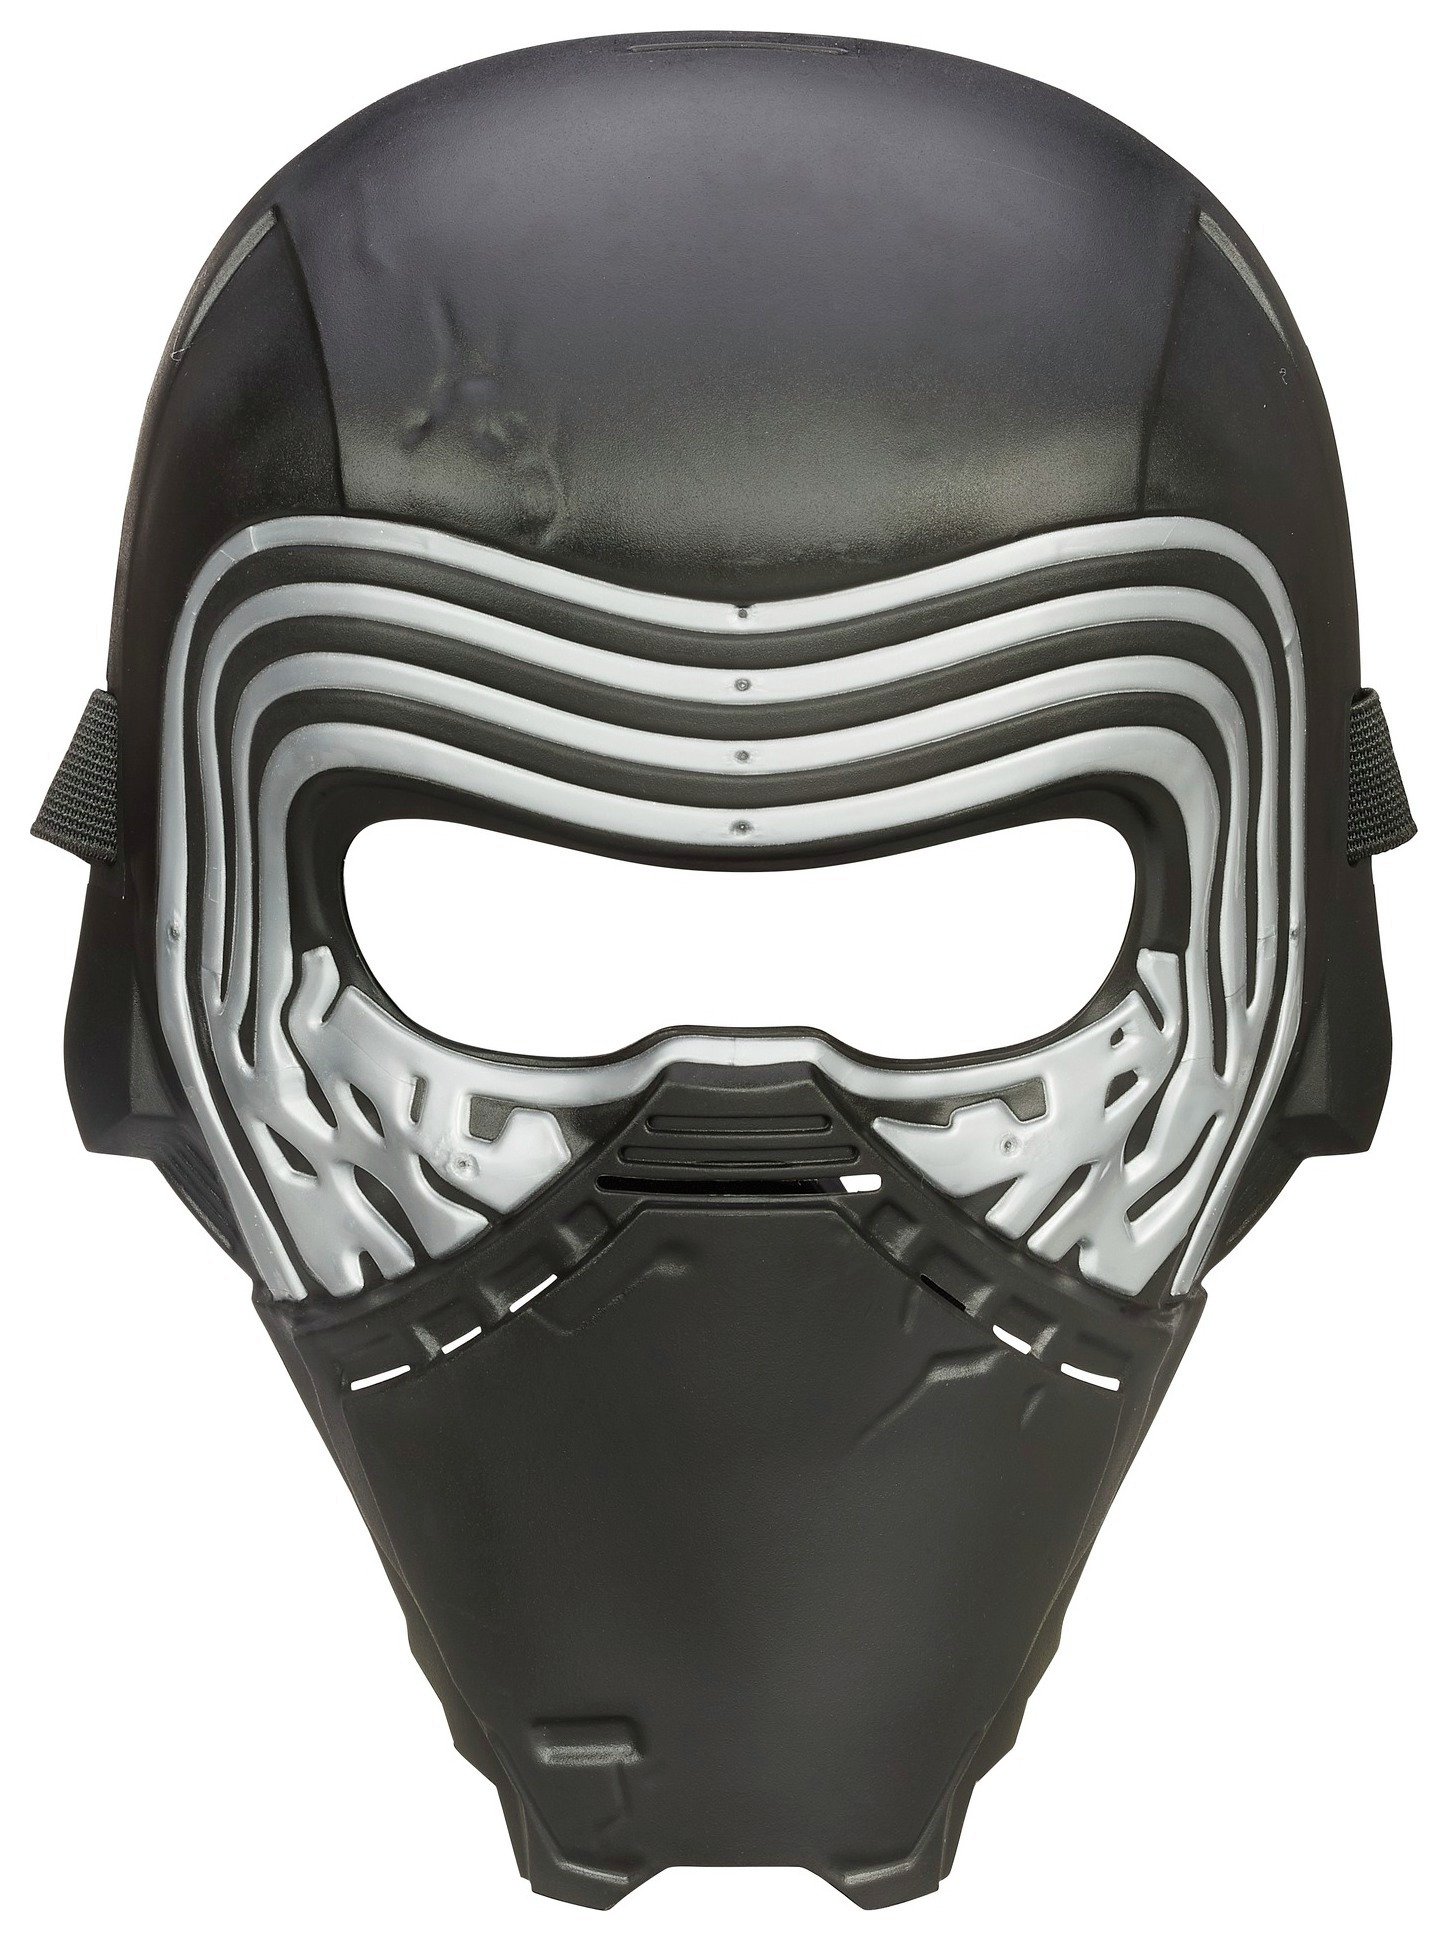 Star Wars: The Force Awakens Mask Assortment